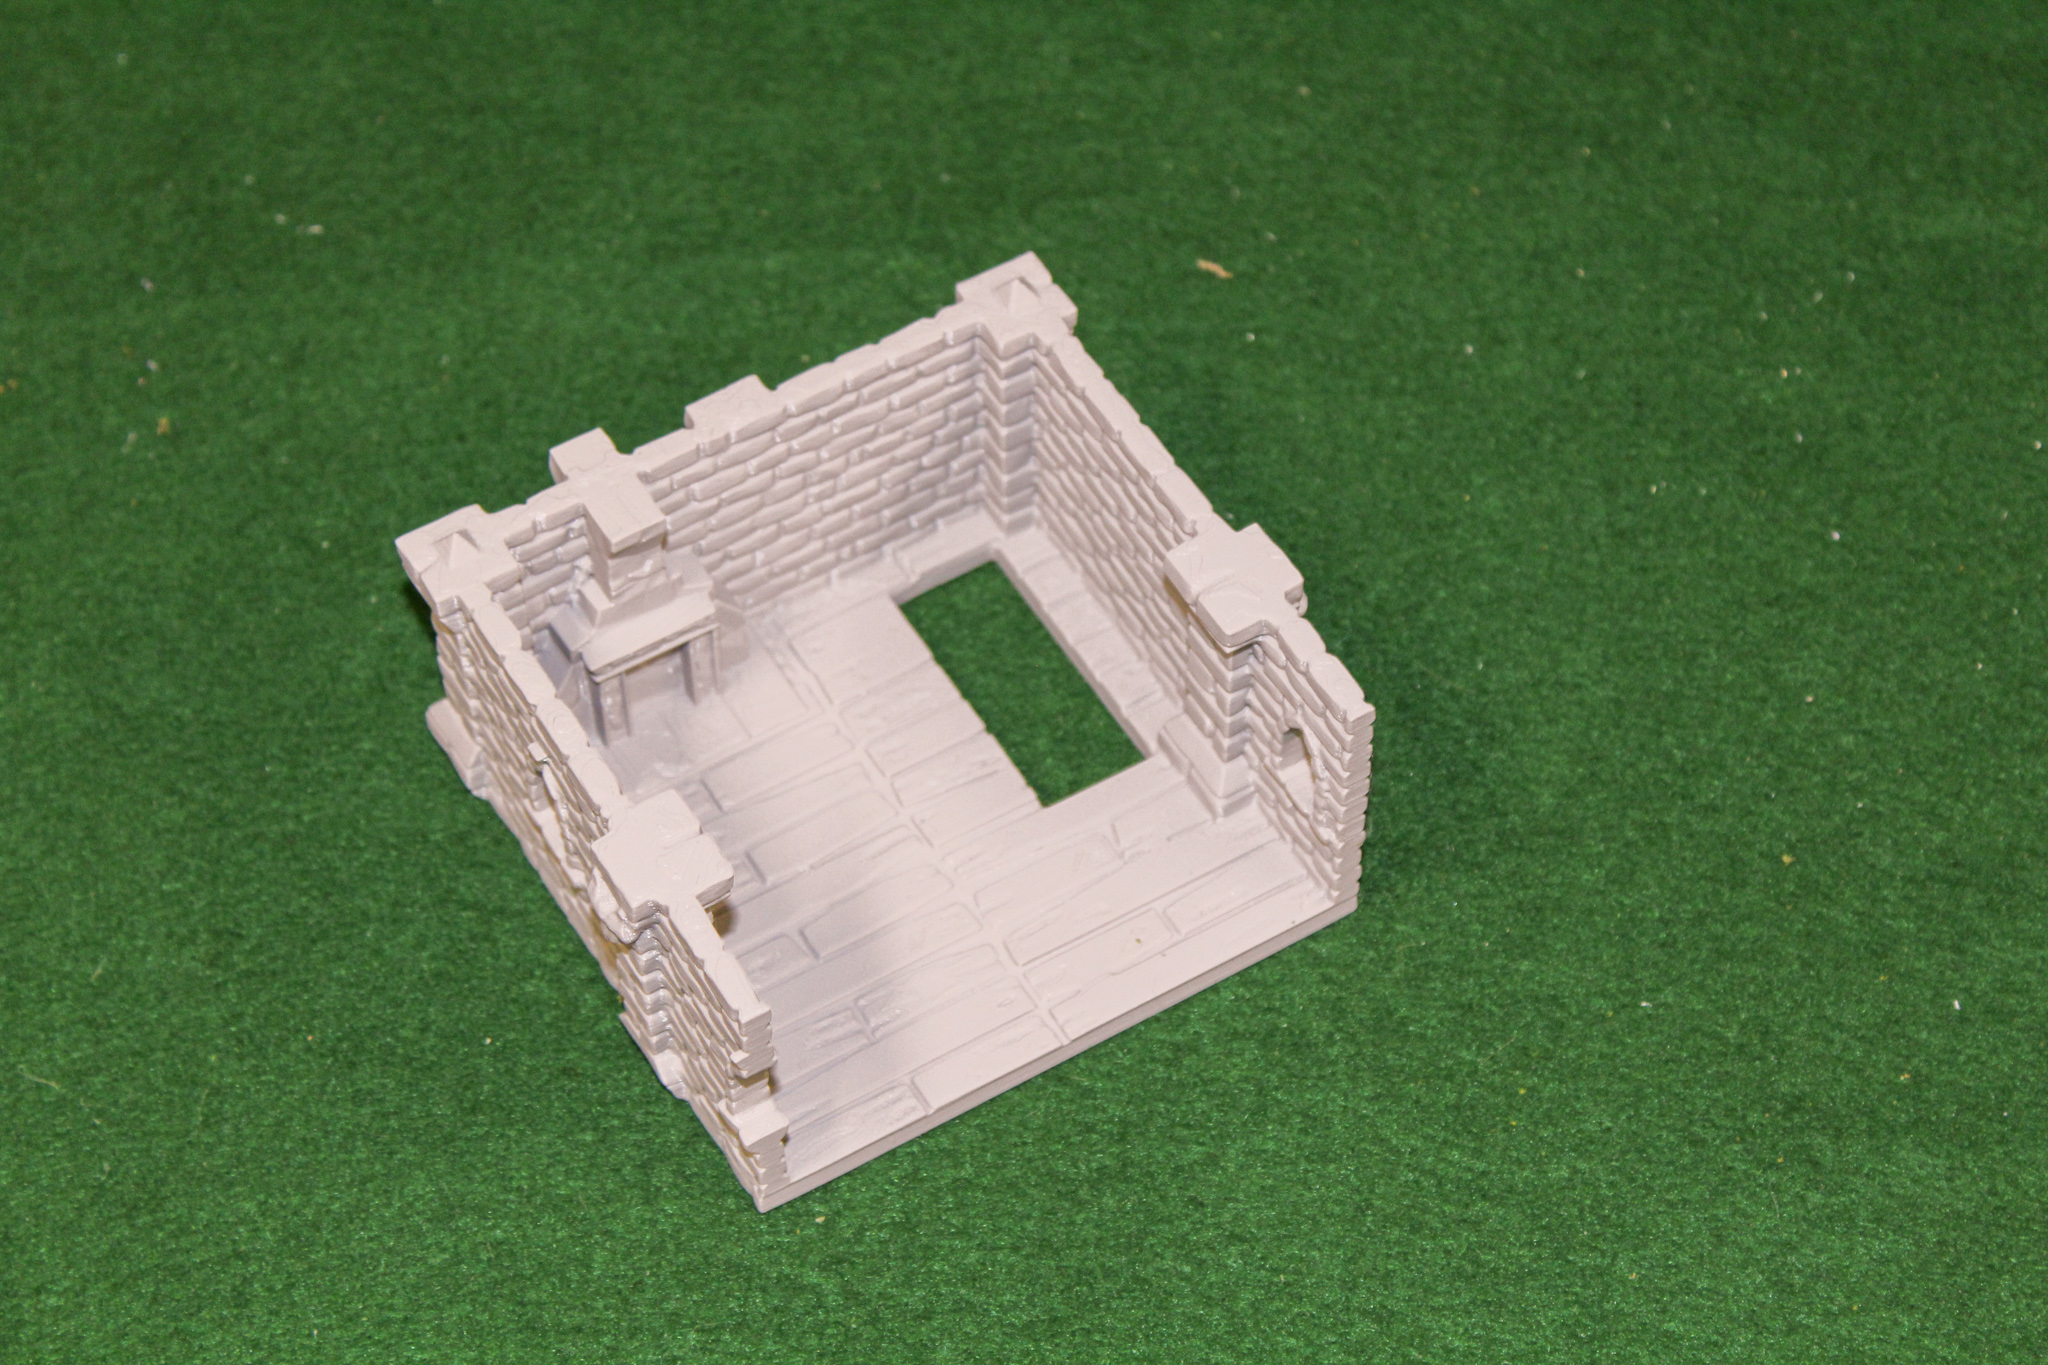 3D printed tabletop wargames terrain and scenery Ulvheim Noble house